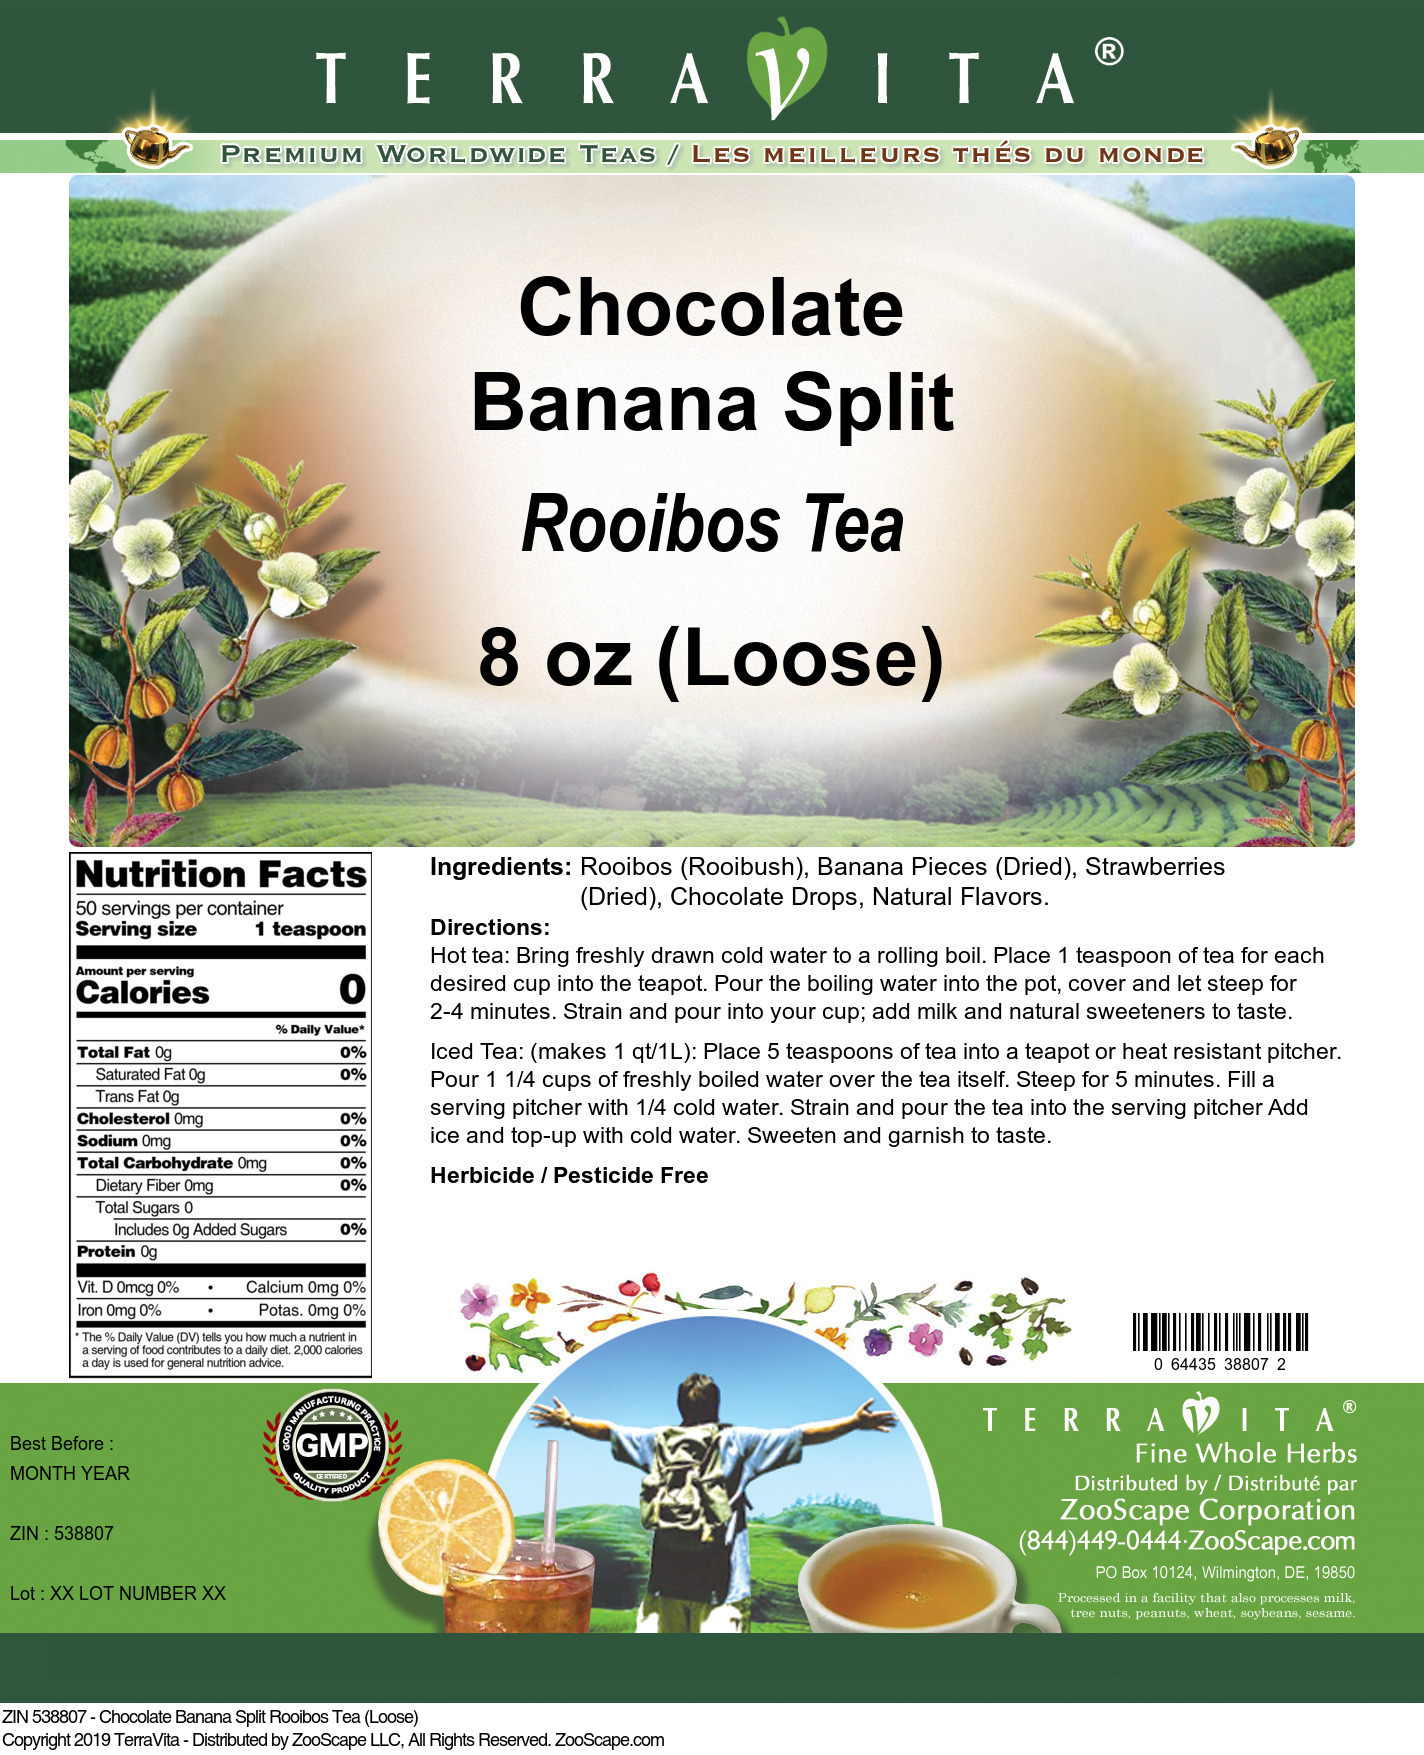 Chocolate Banana Split Rooibos Tea (Loose) - Label